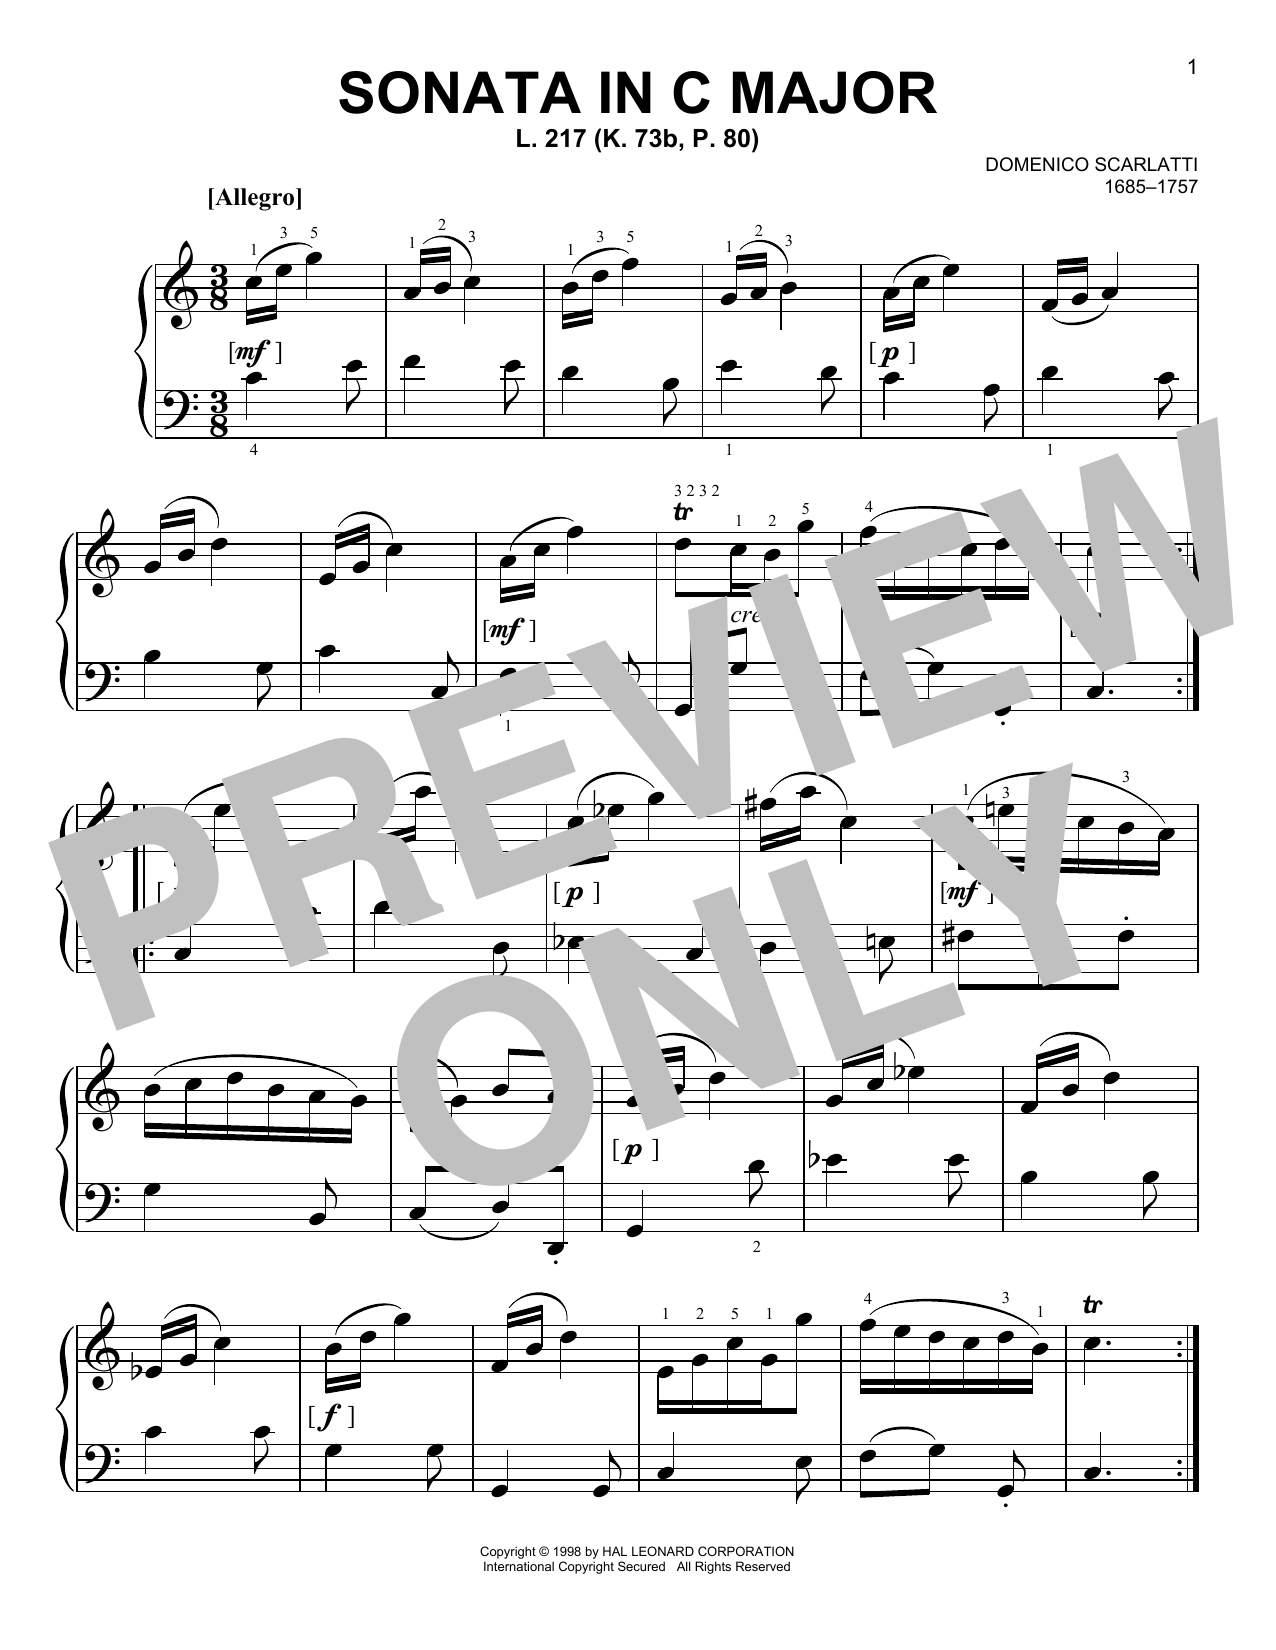 Domenico Scarlatti Sonata In C Major, L. 217 sheet music notes and chords arranged for Easy Piano